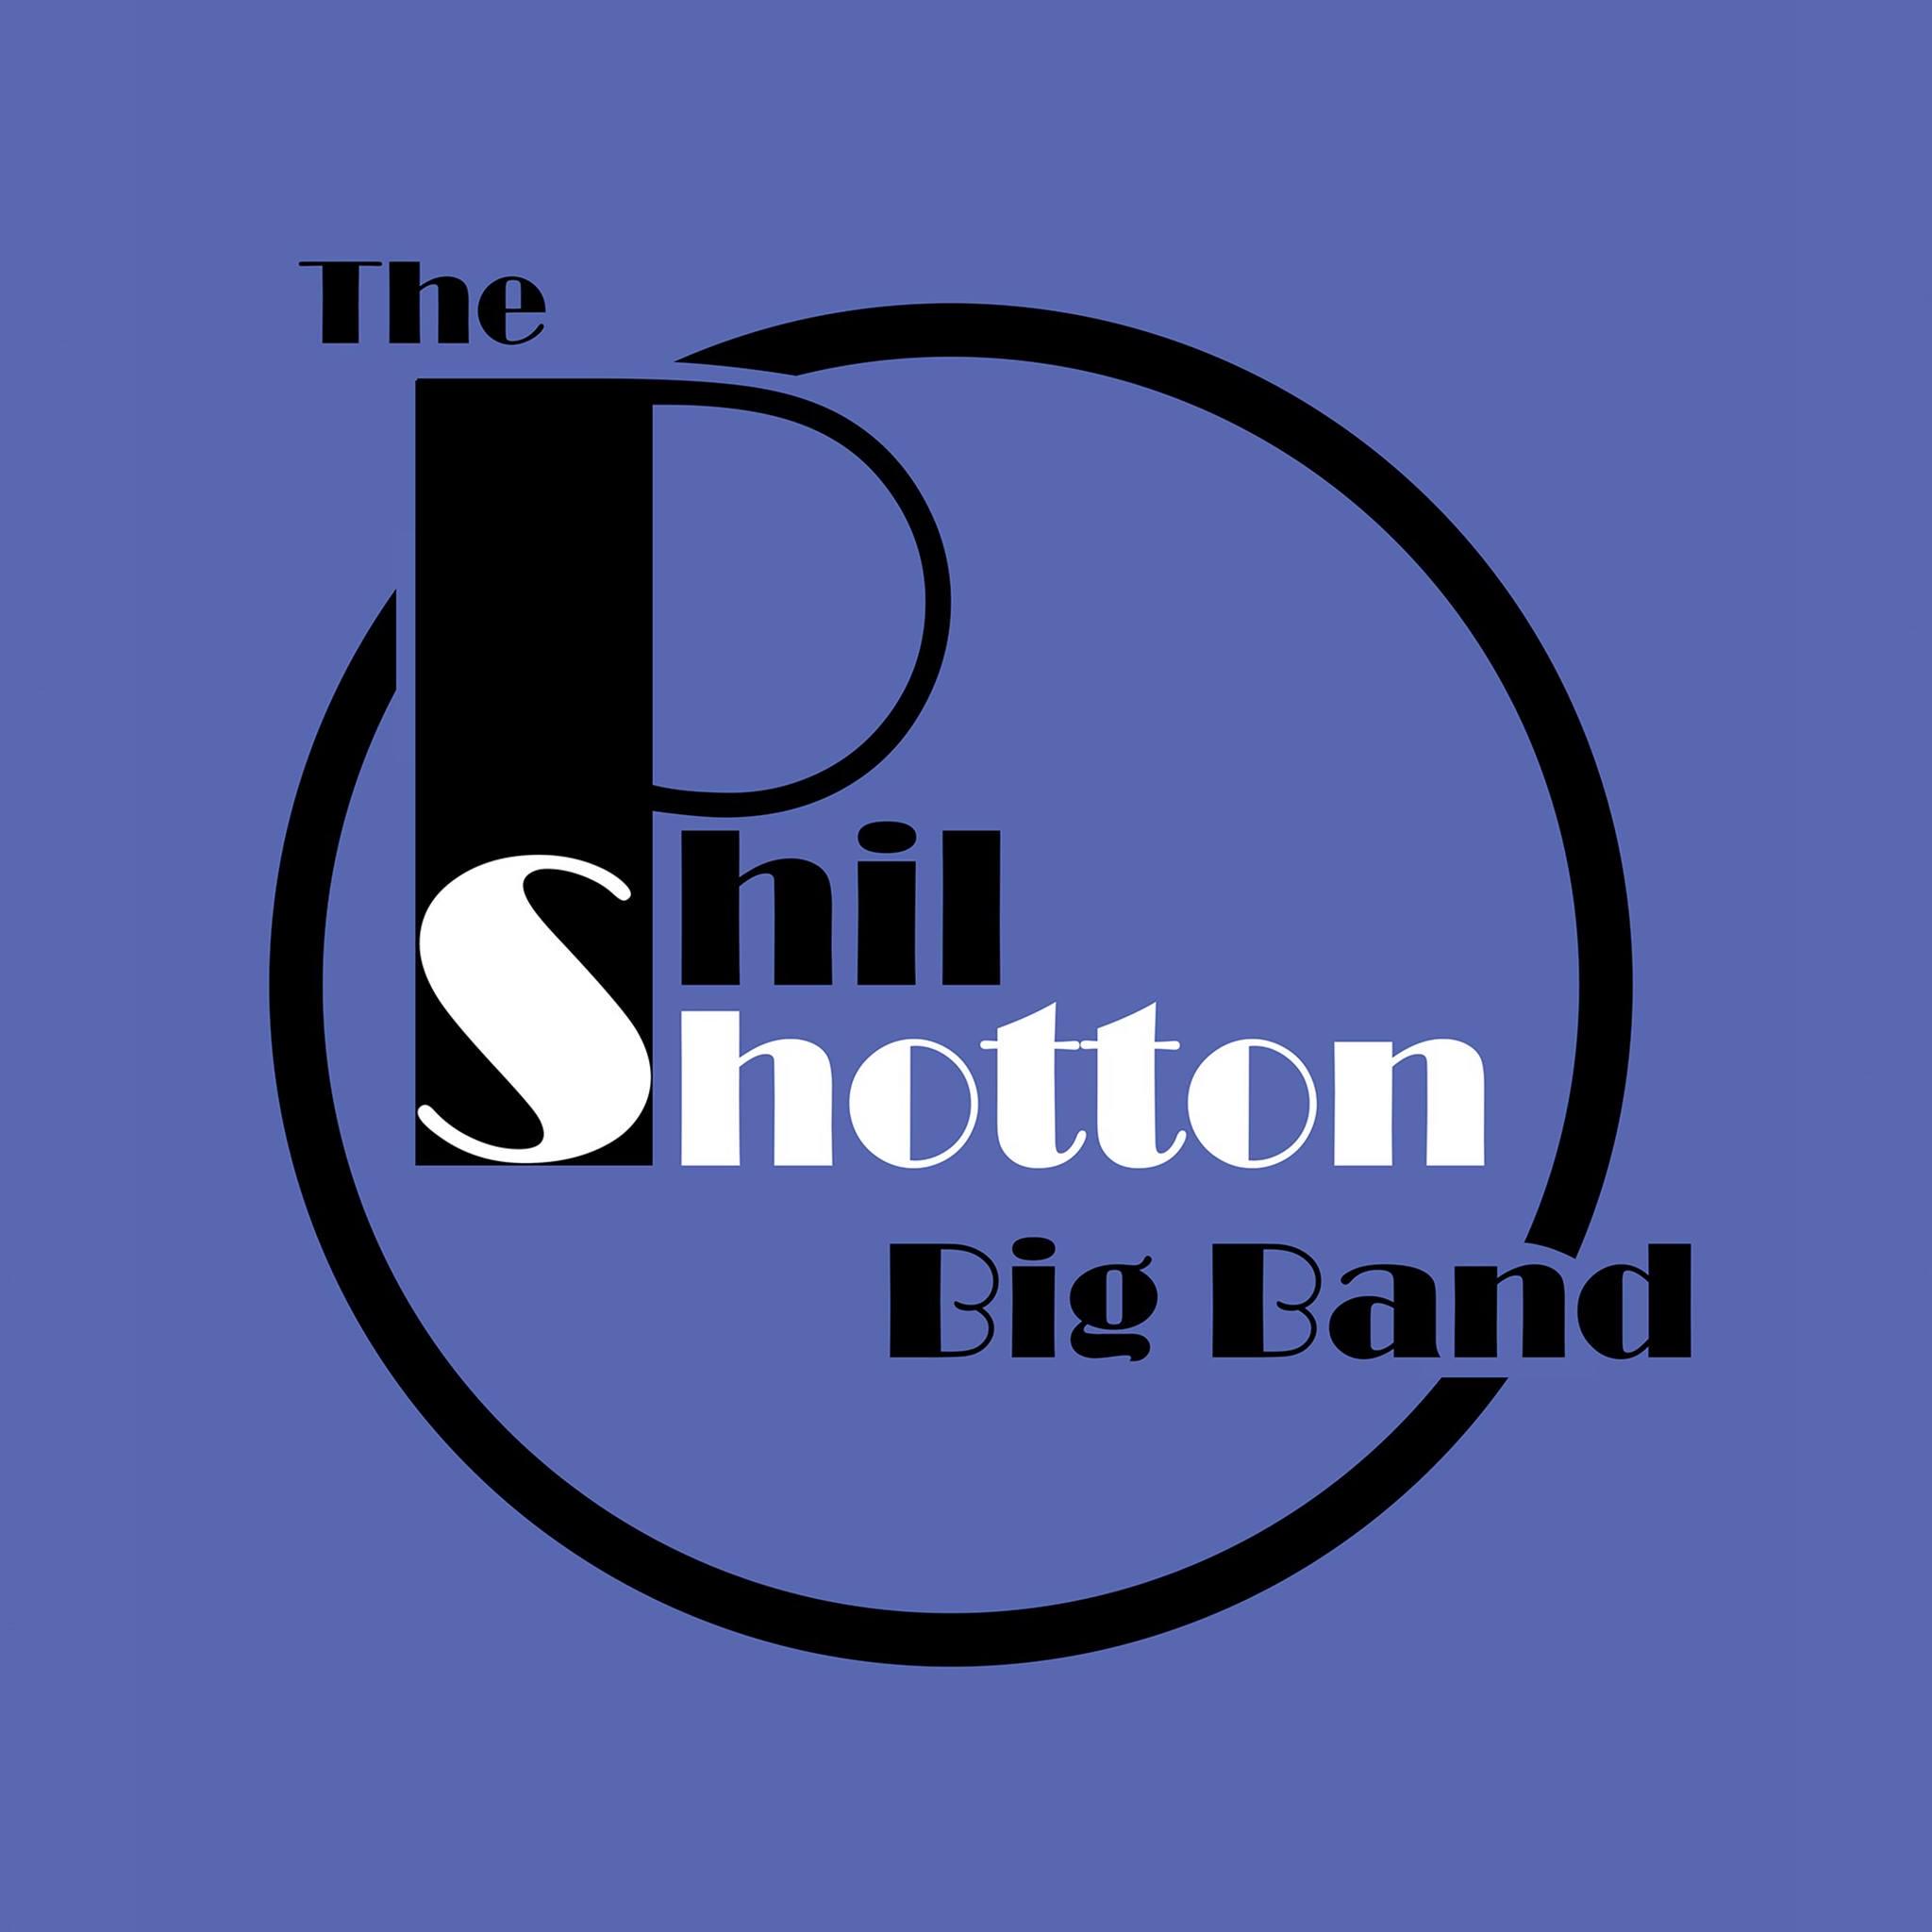 Phil Shotton Big Band